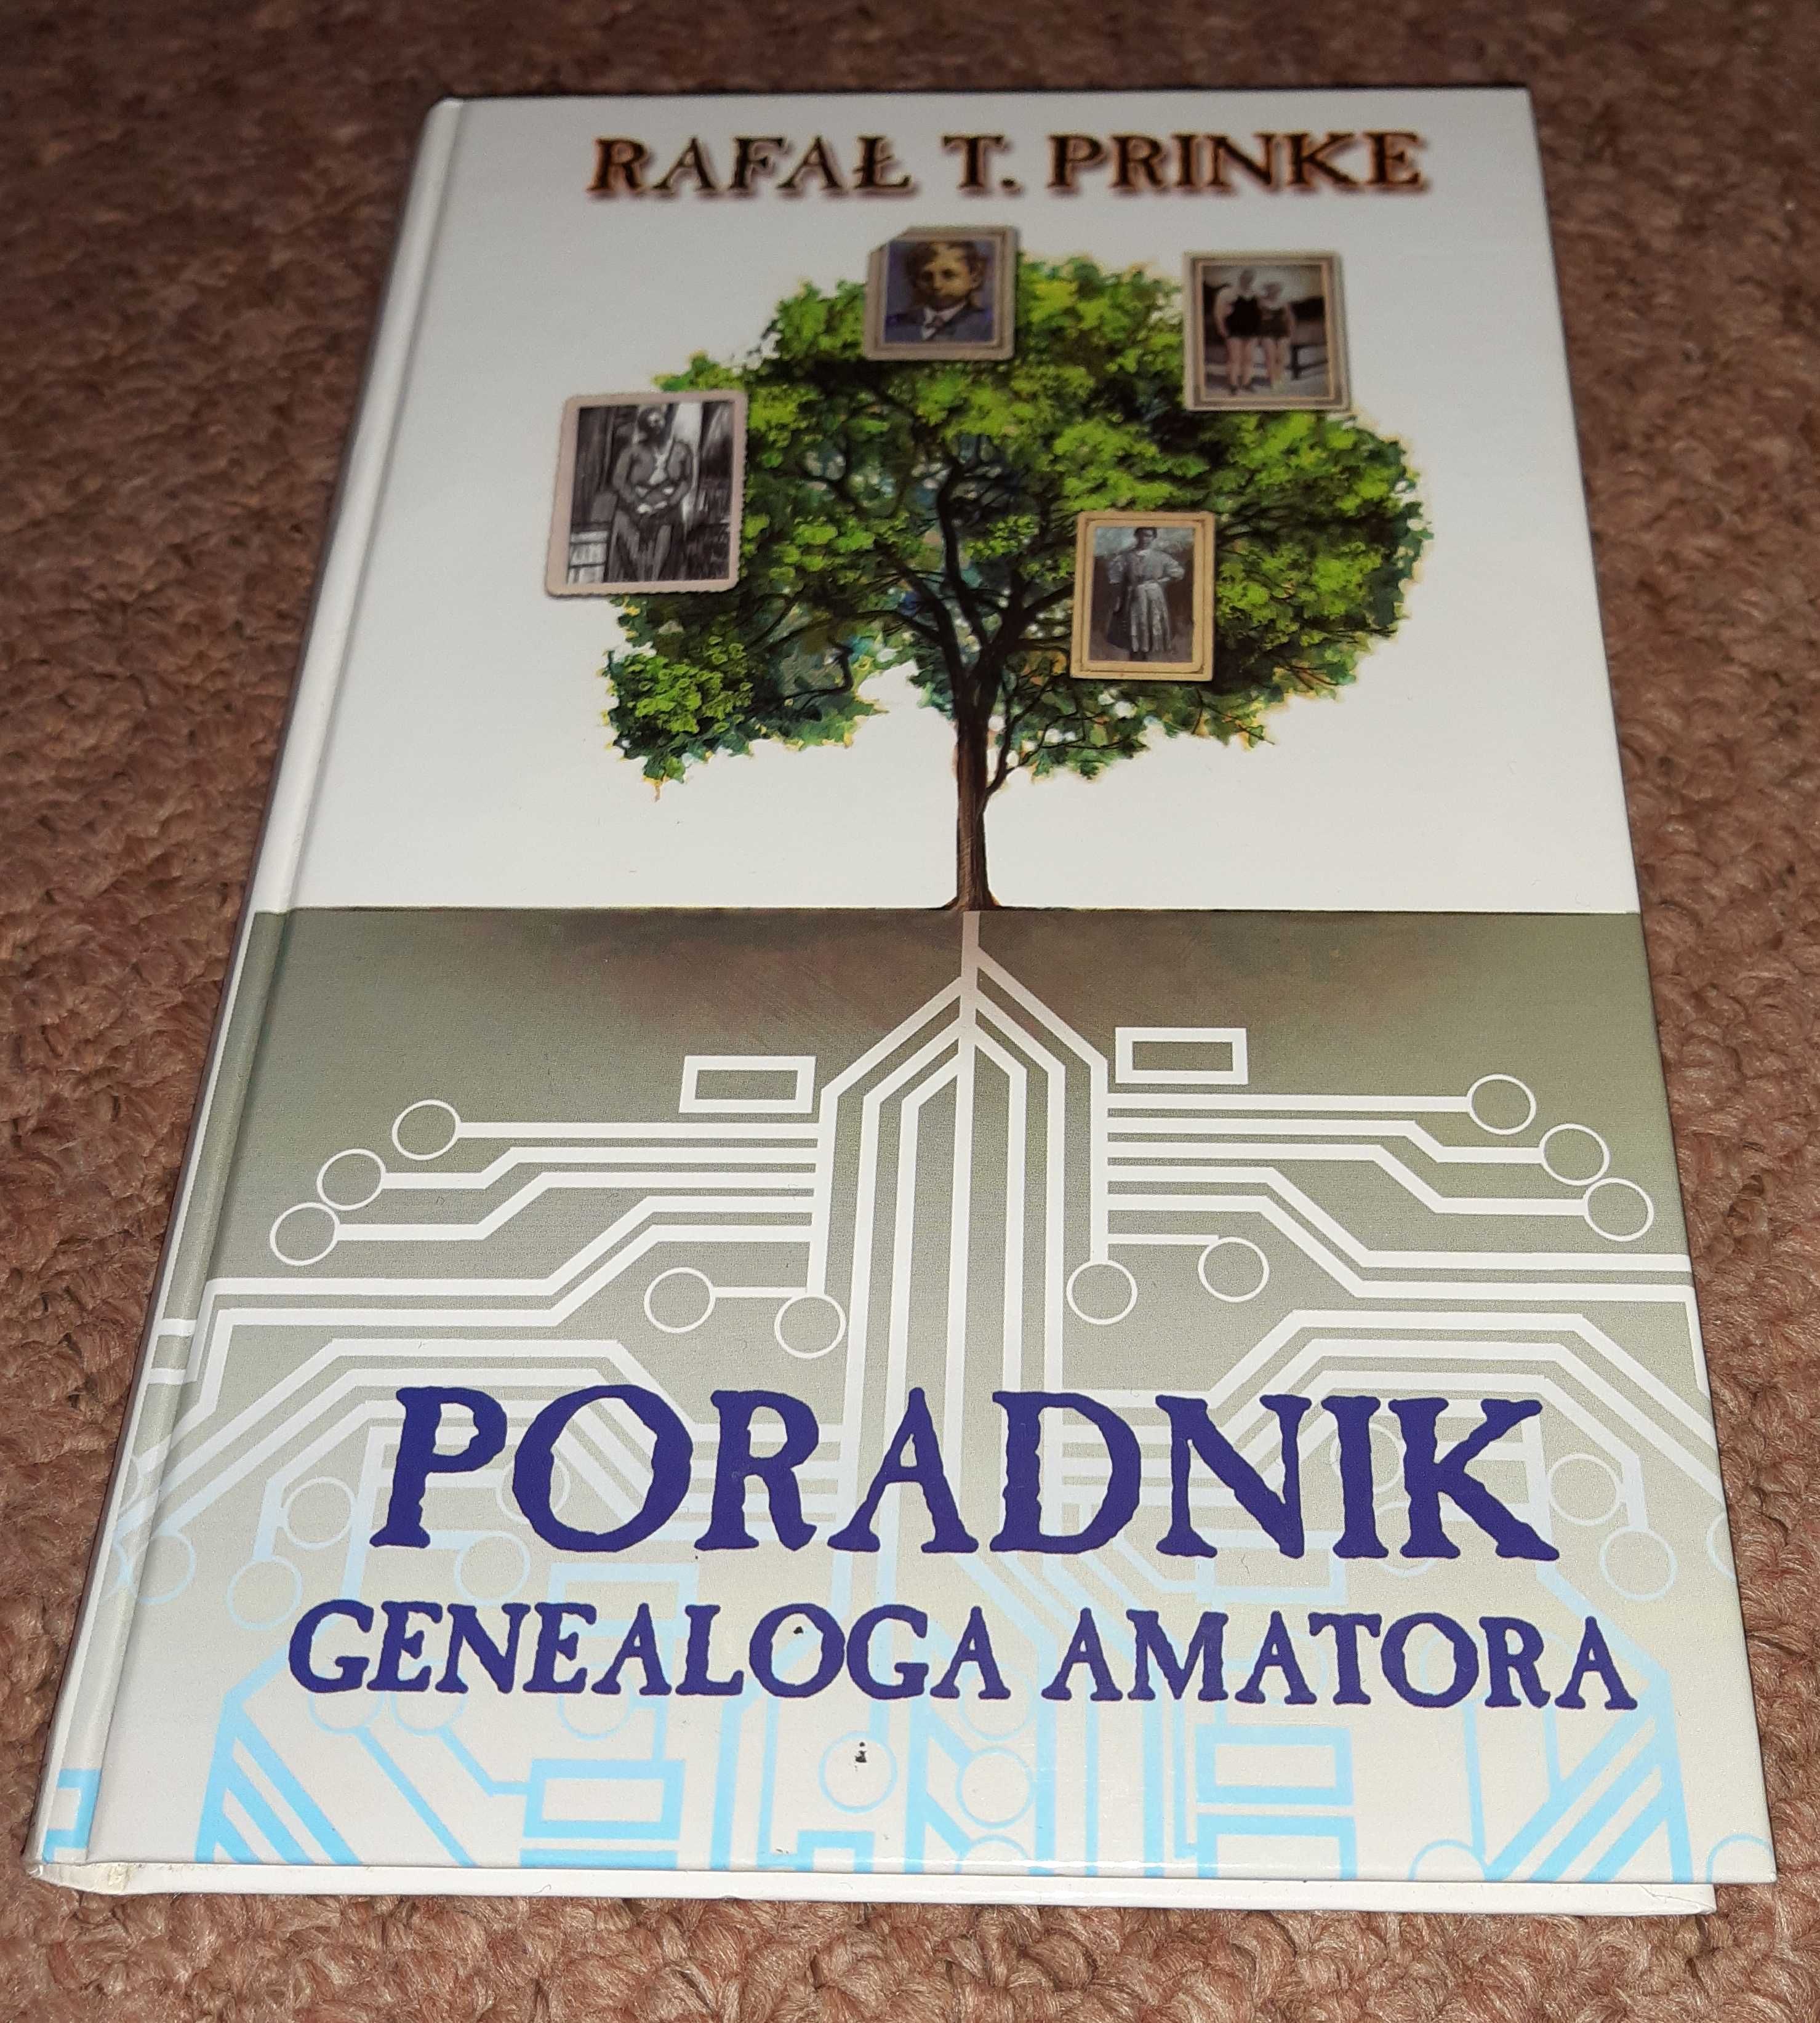 Rafał T. Prinke "Poradnik genealoga amatora"